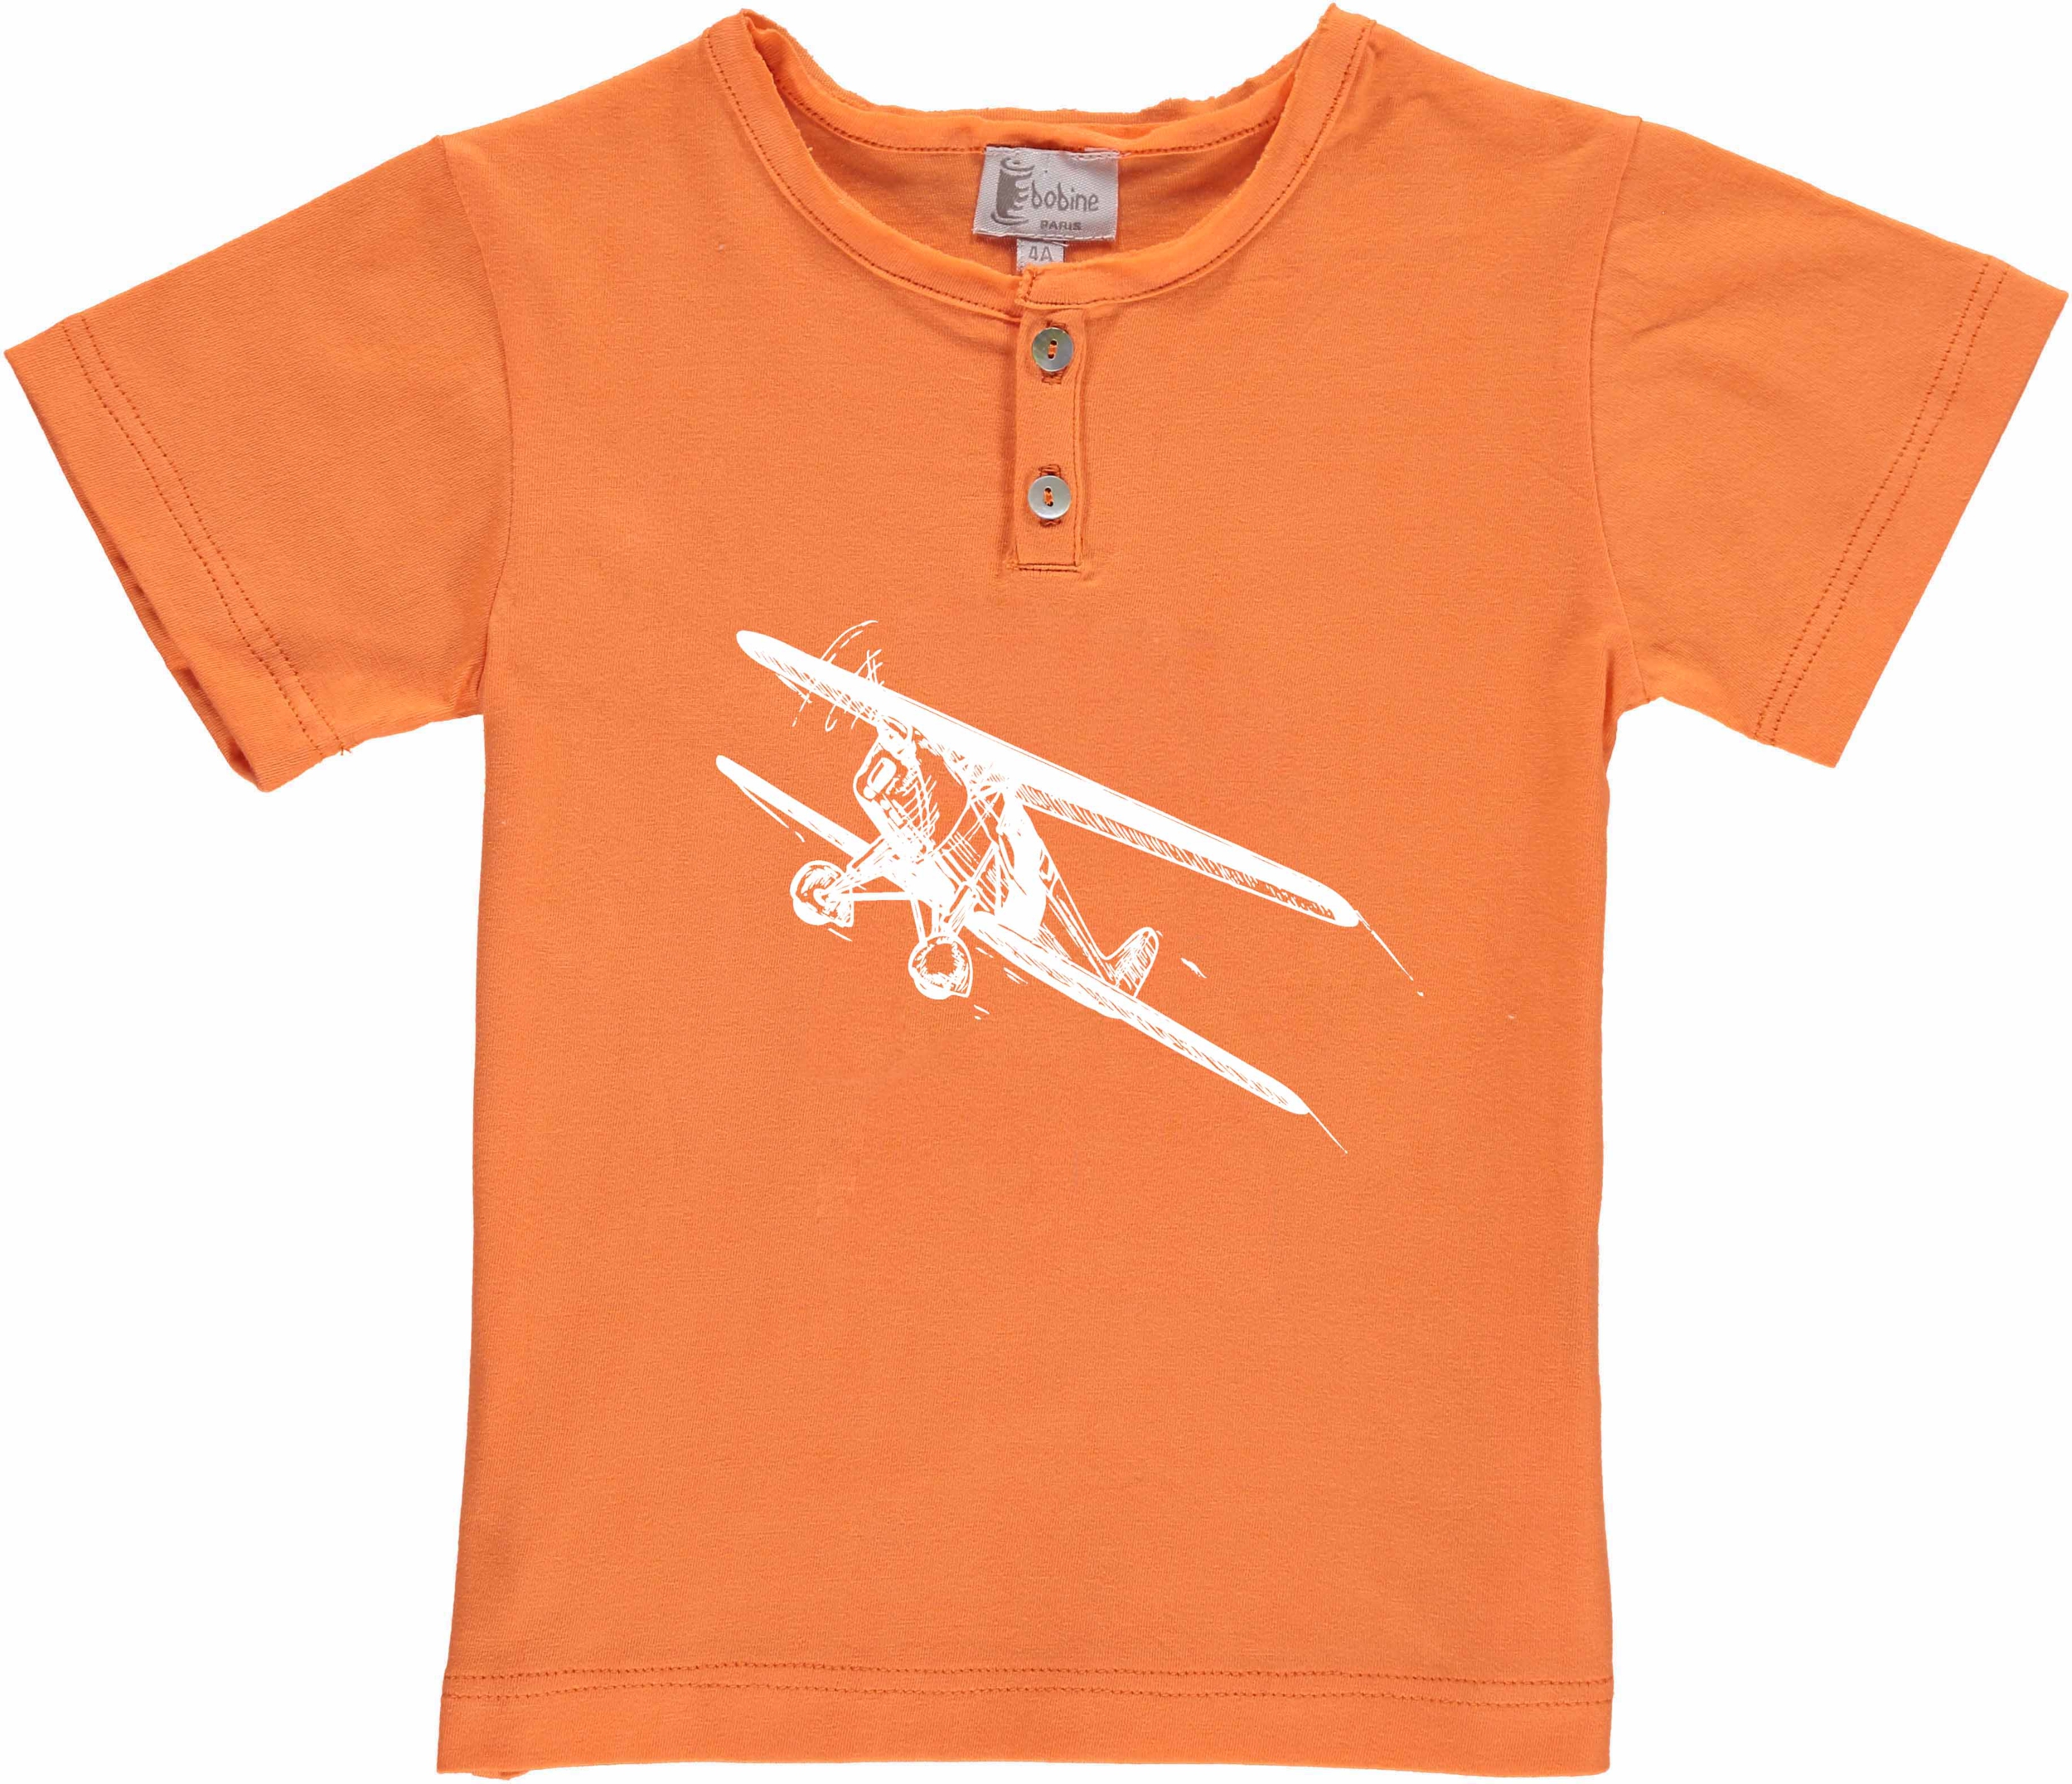 Tshirt orange avion